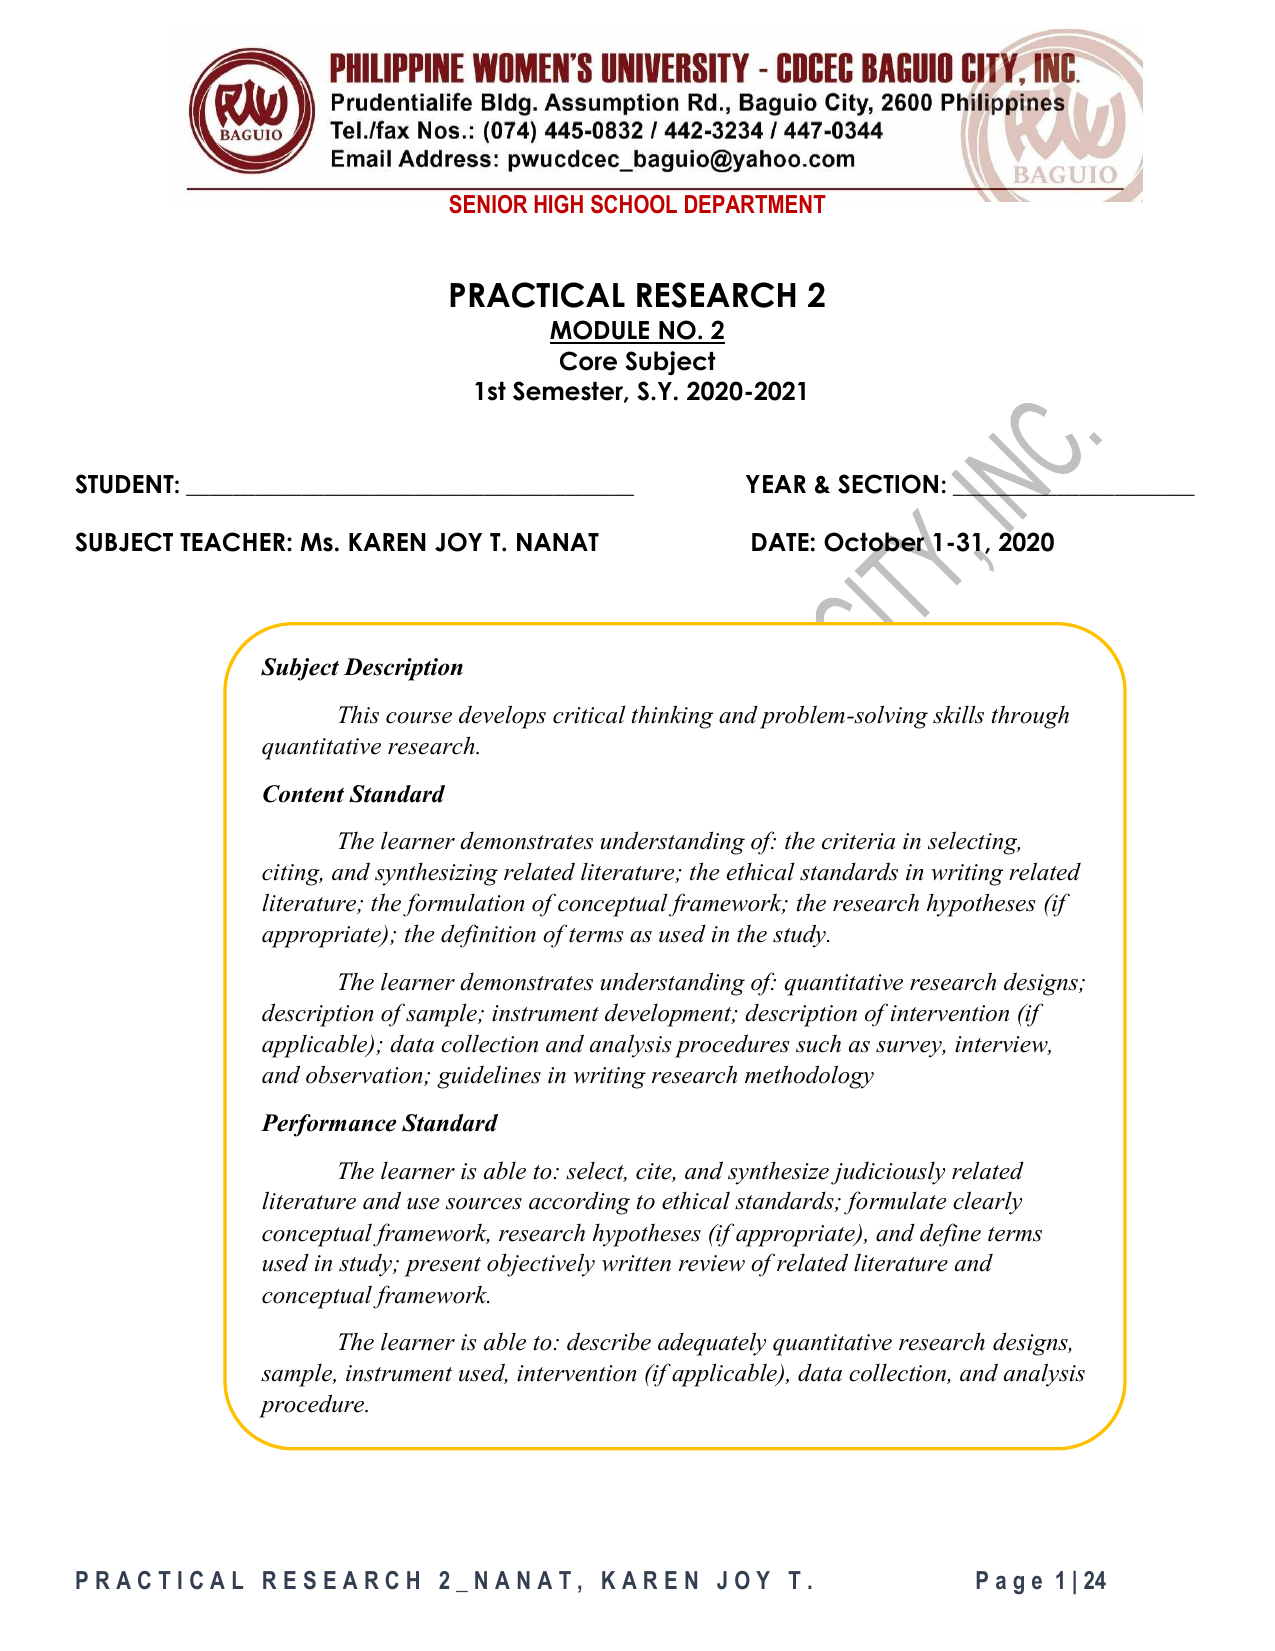 Practical Research 2 Module 3 Q1 Docx 12 Practical Research 2 Quarter ...